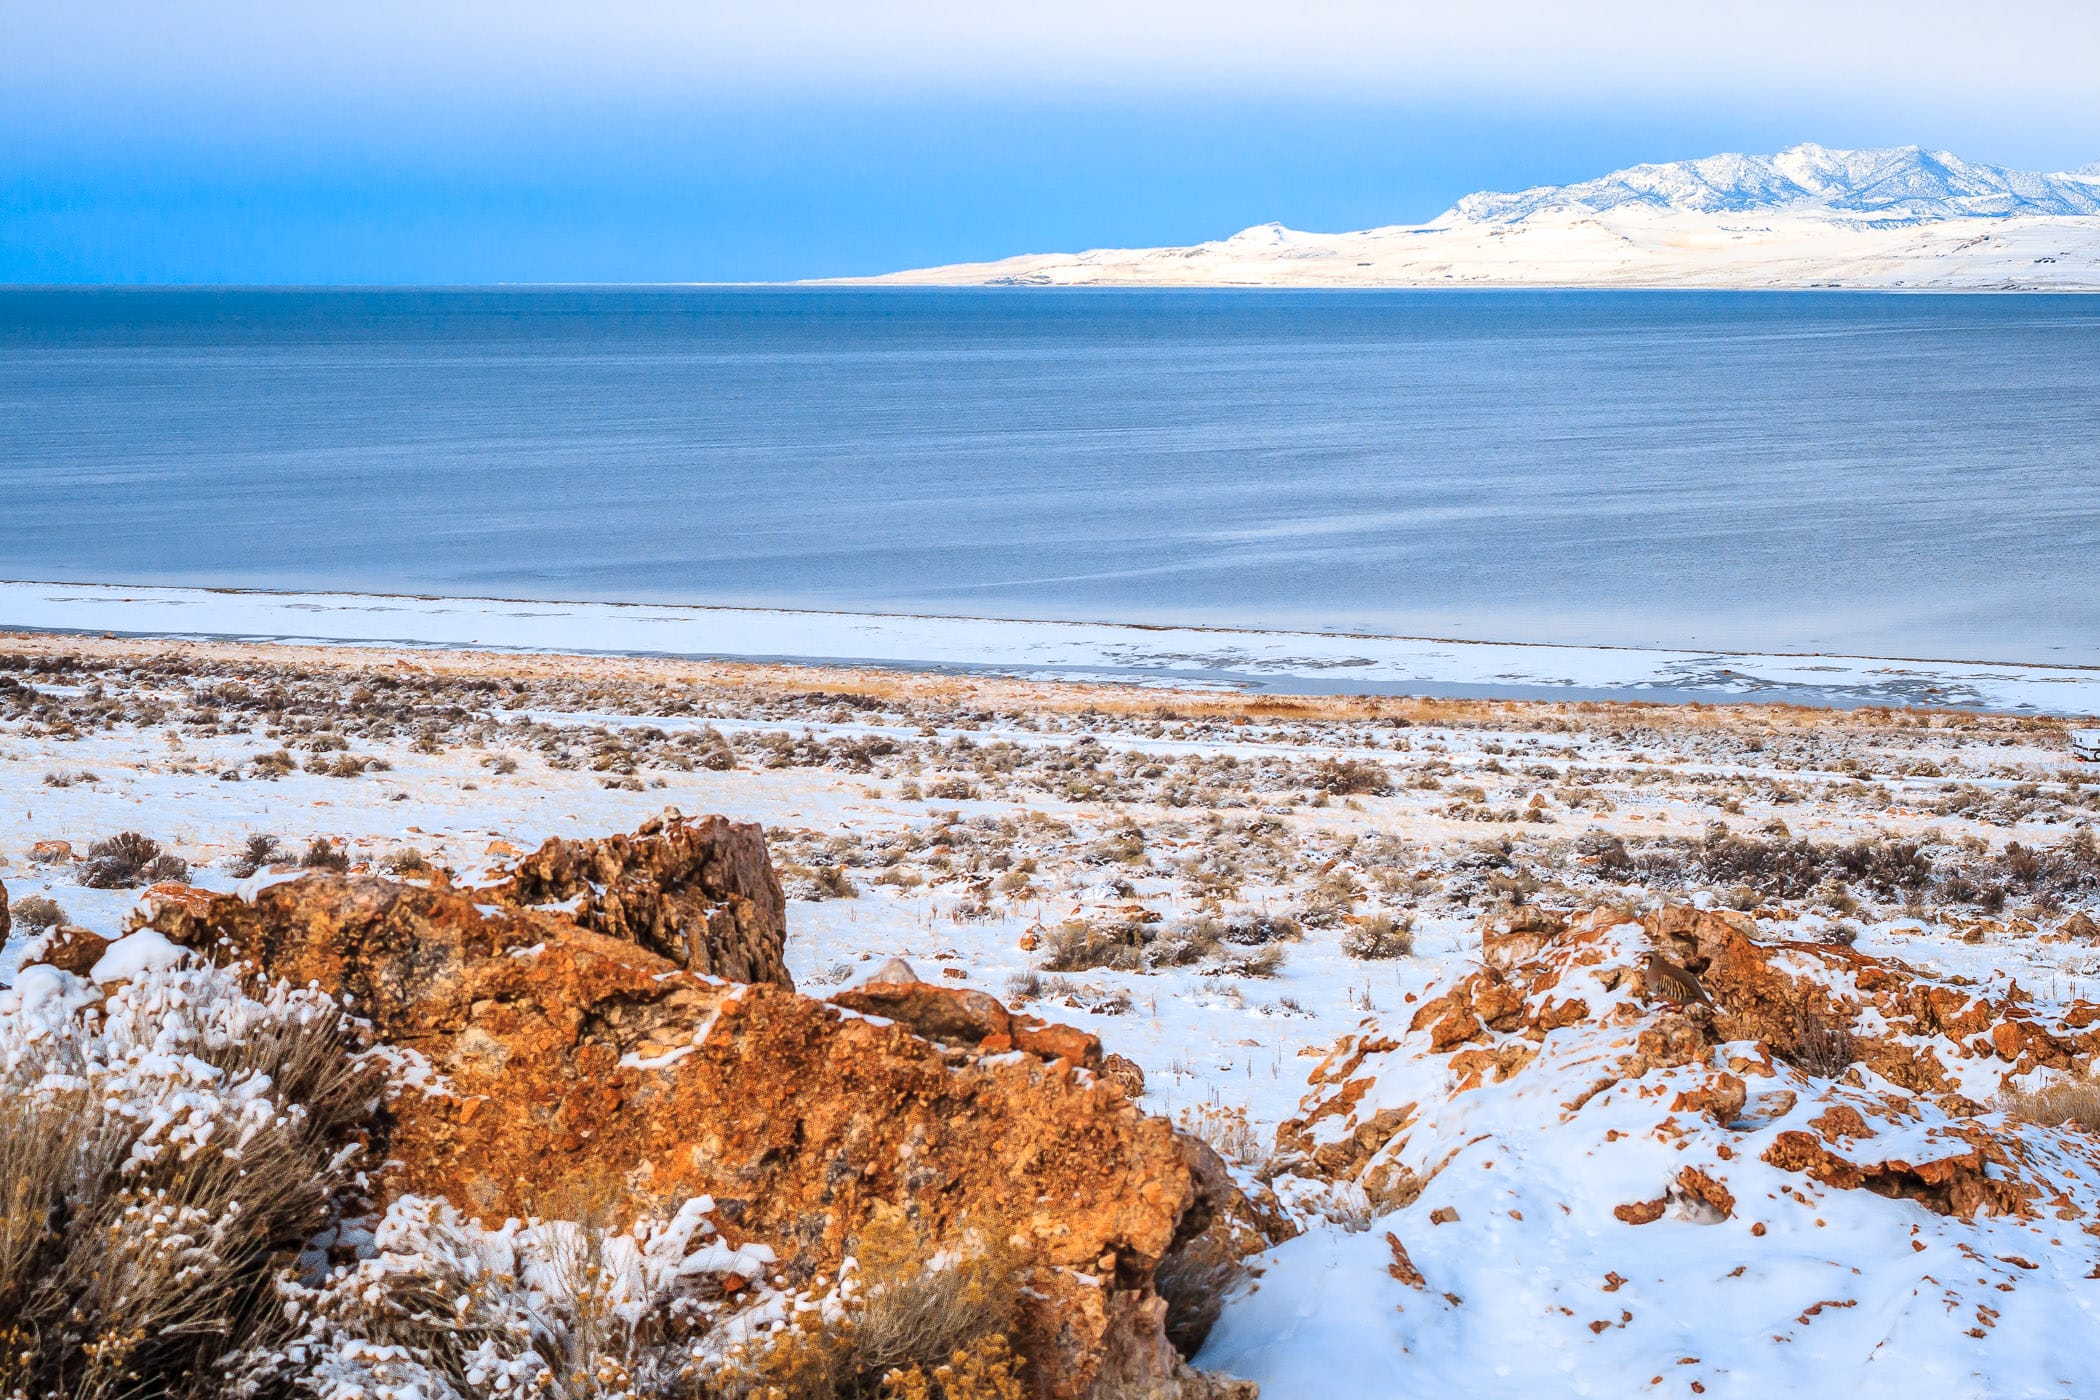 The brush-and-rock-covered winter shoreline of Antelope Island in Utah's Great Salt Lake.